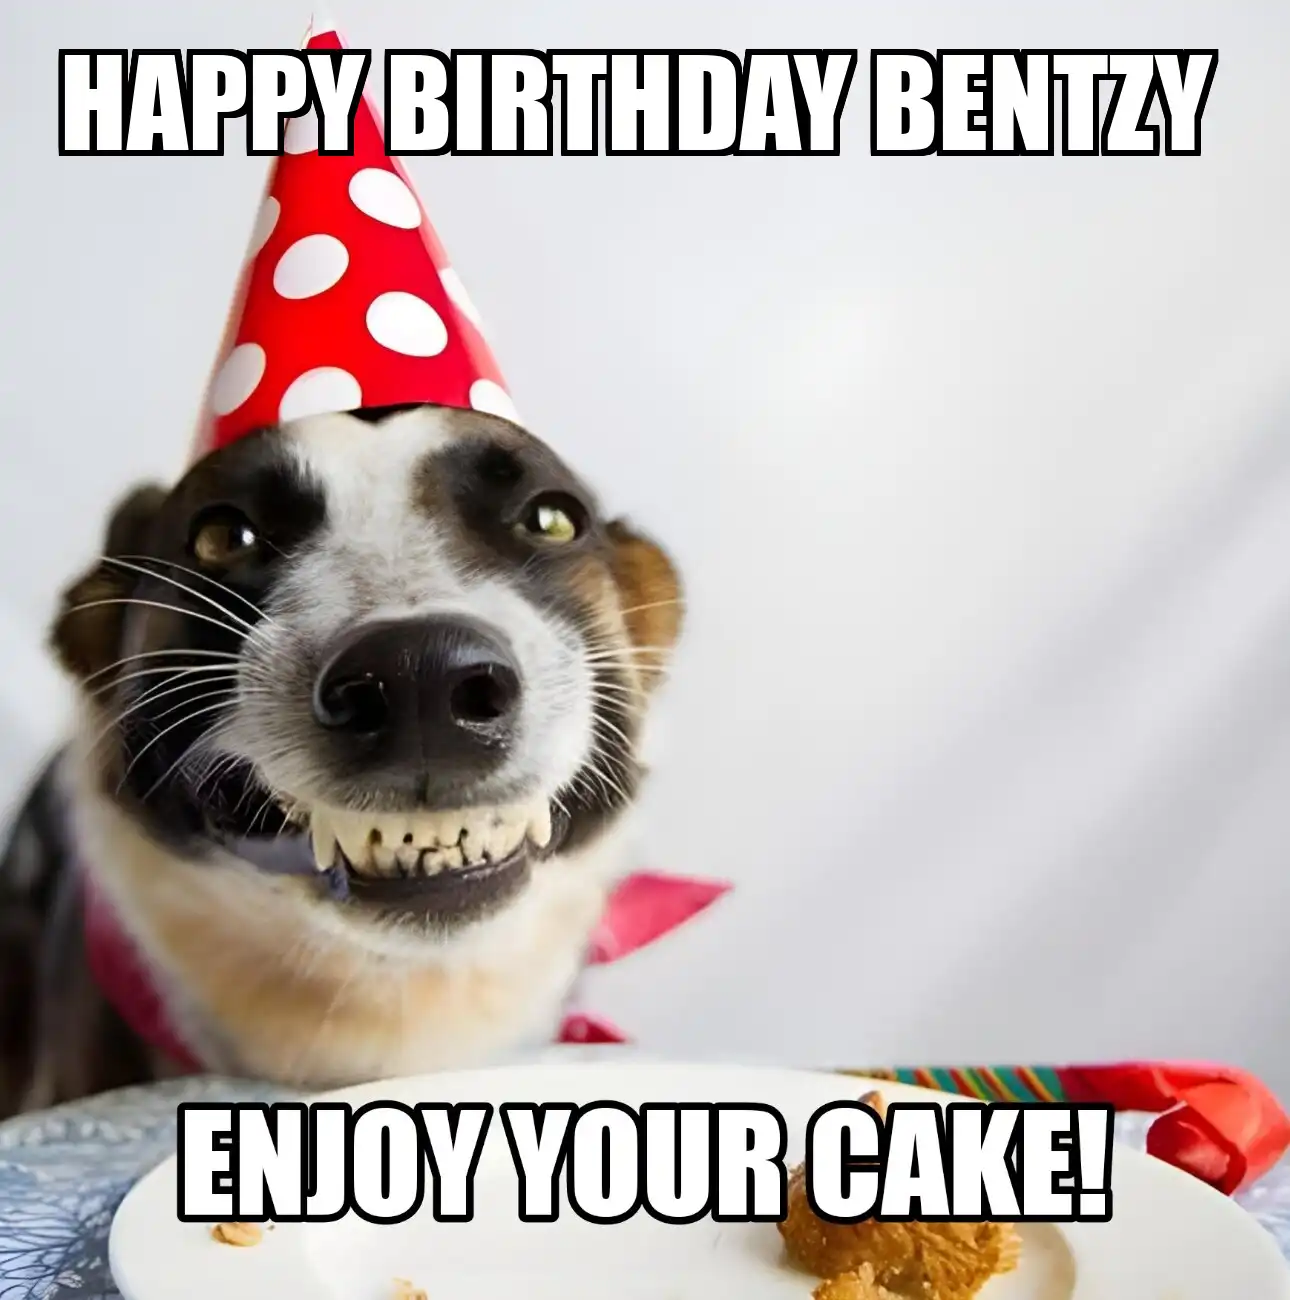 Happy Birthday Bentzy Enjoy Your Cake Dog Meme